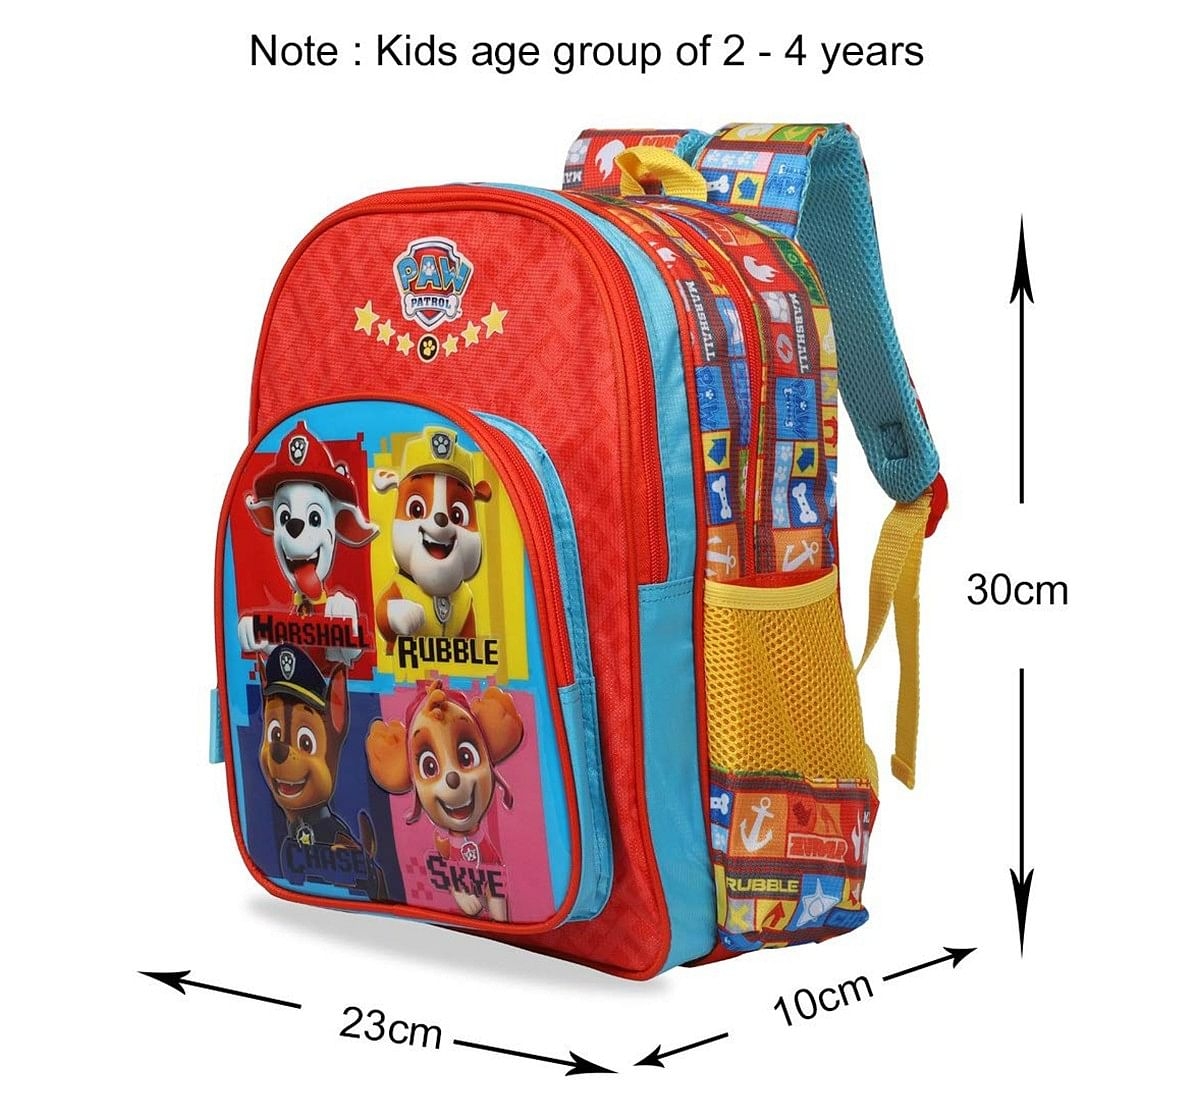 Paw Patrol Paw Patrol All Players School Bag 41 Cm Bags for Kids age 7Y+ 